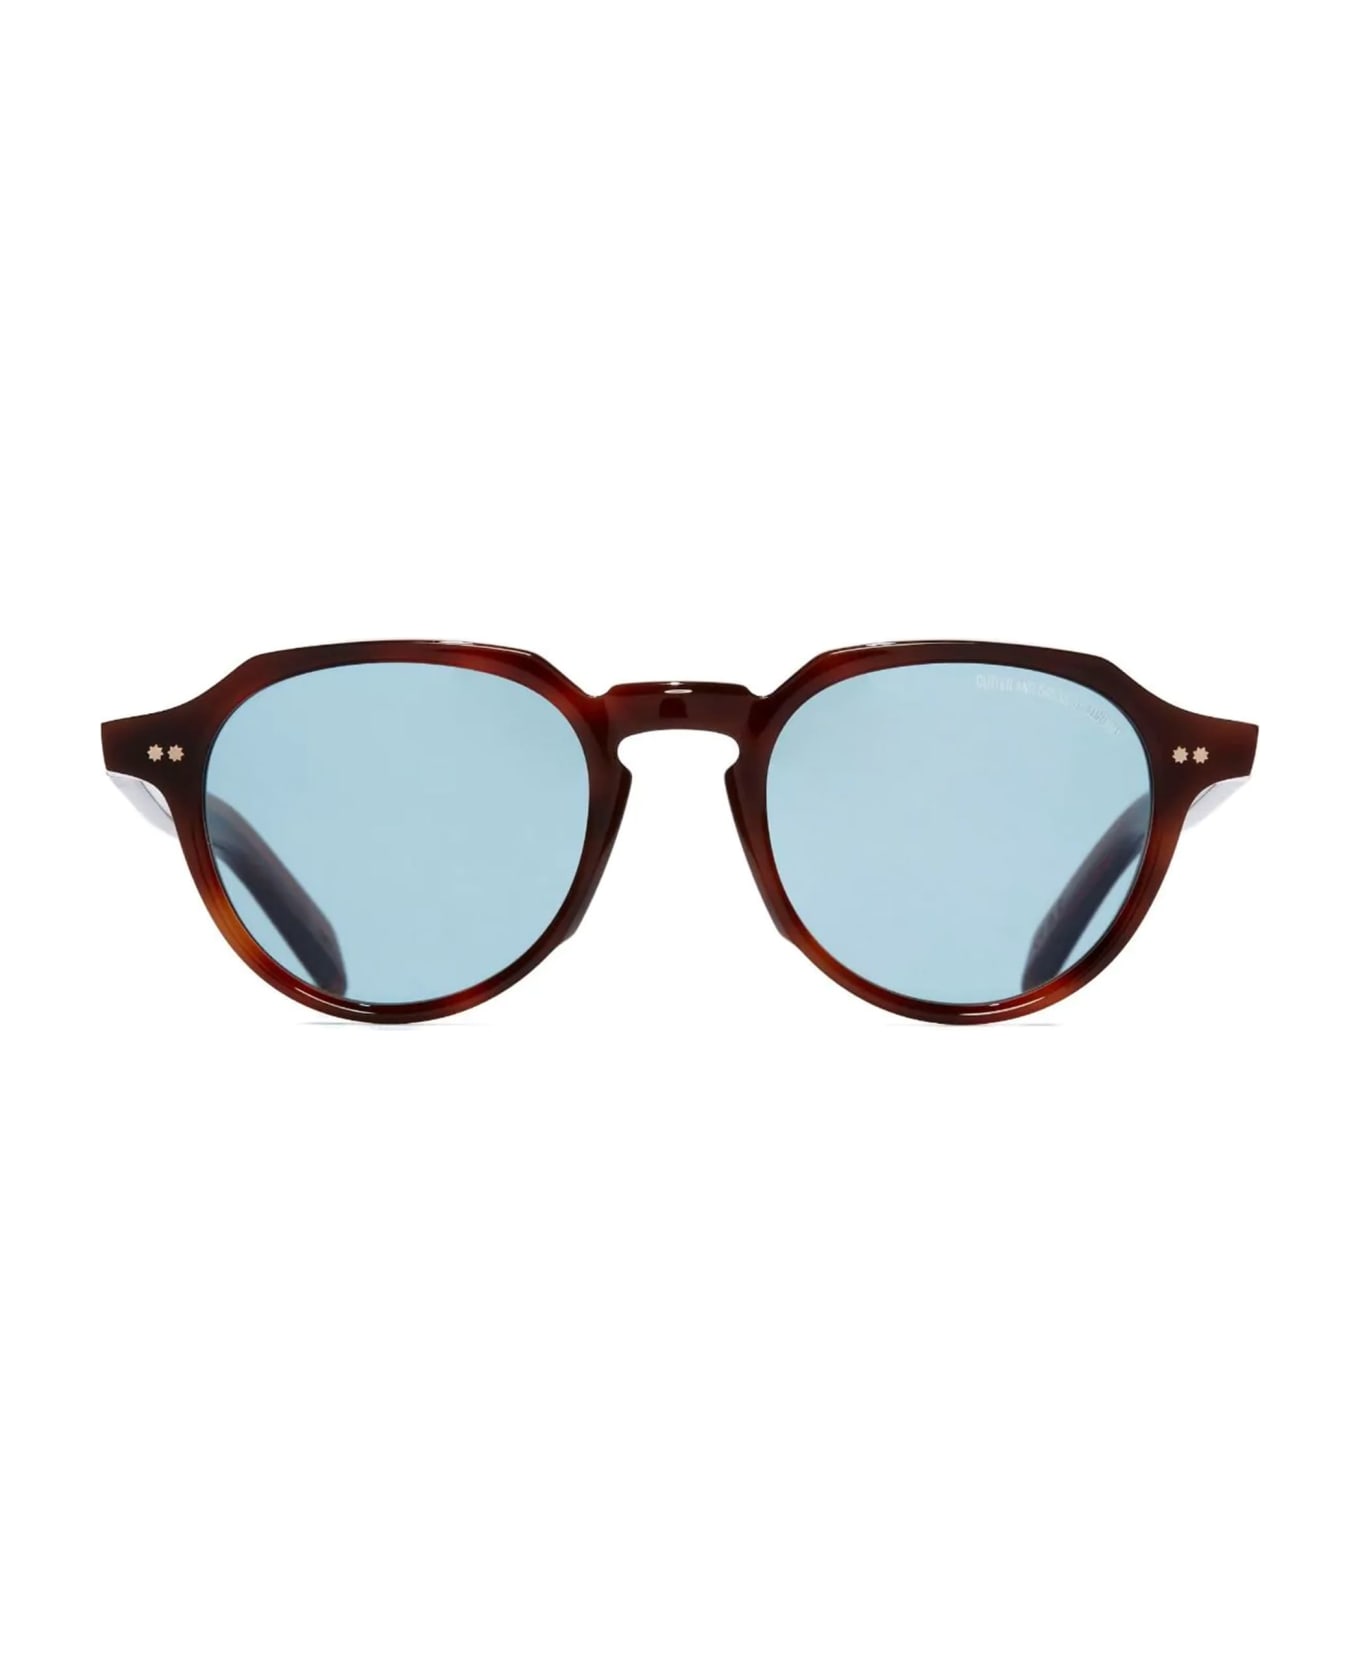 Cutler and Gross Gr06 / Vintage Sunburst Sunglasses - brown サングラス